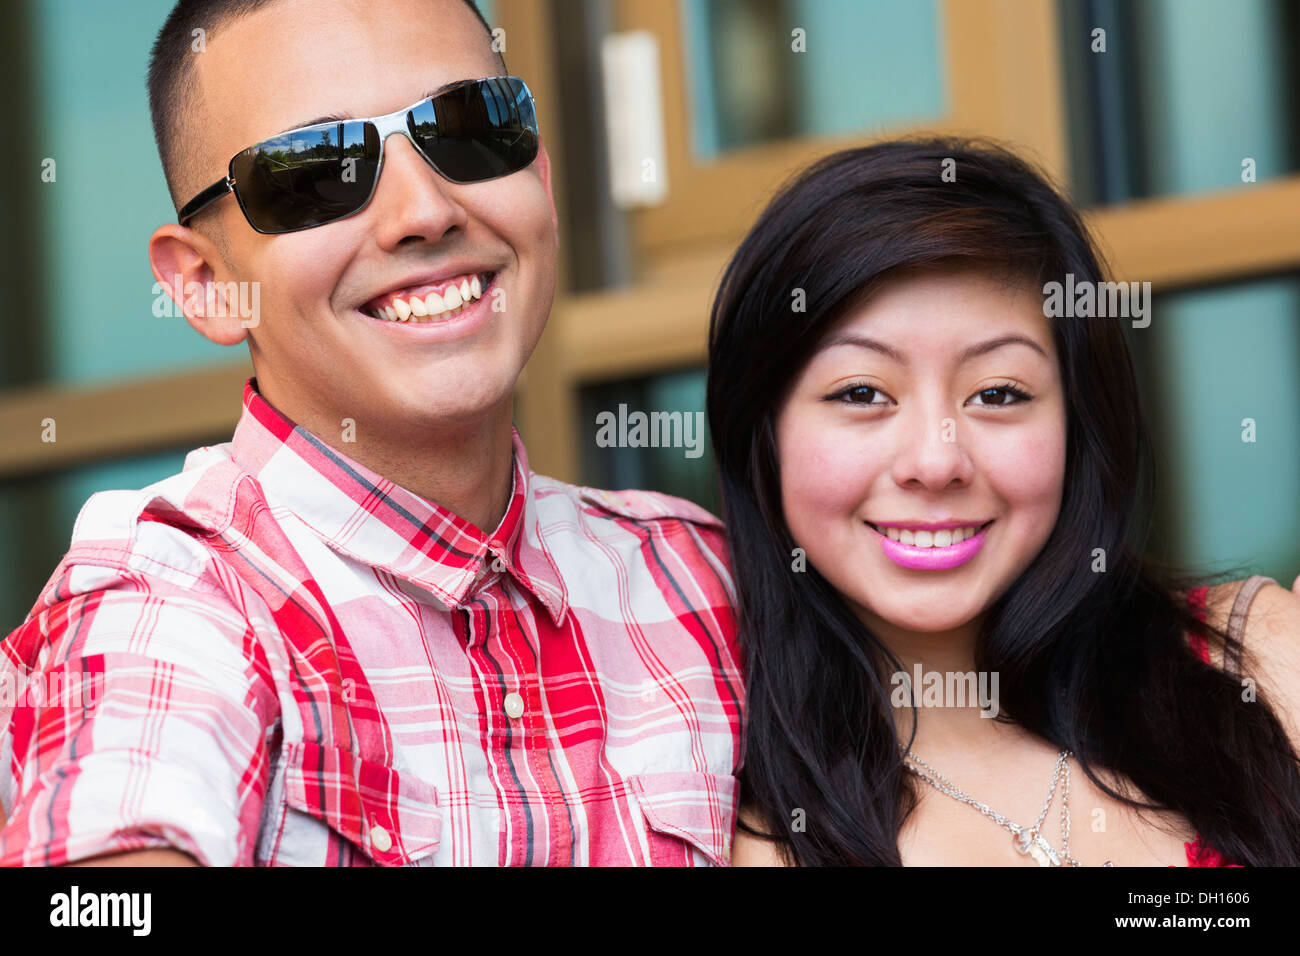 Hispanic couple smiling outdoors Stock Photo